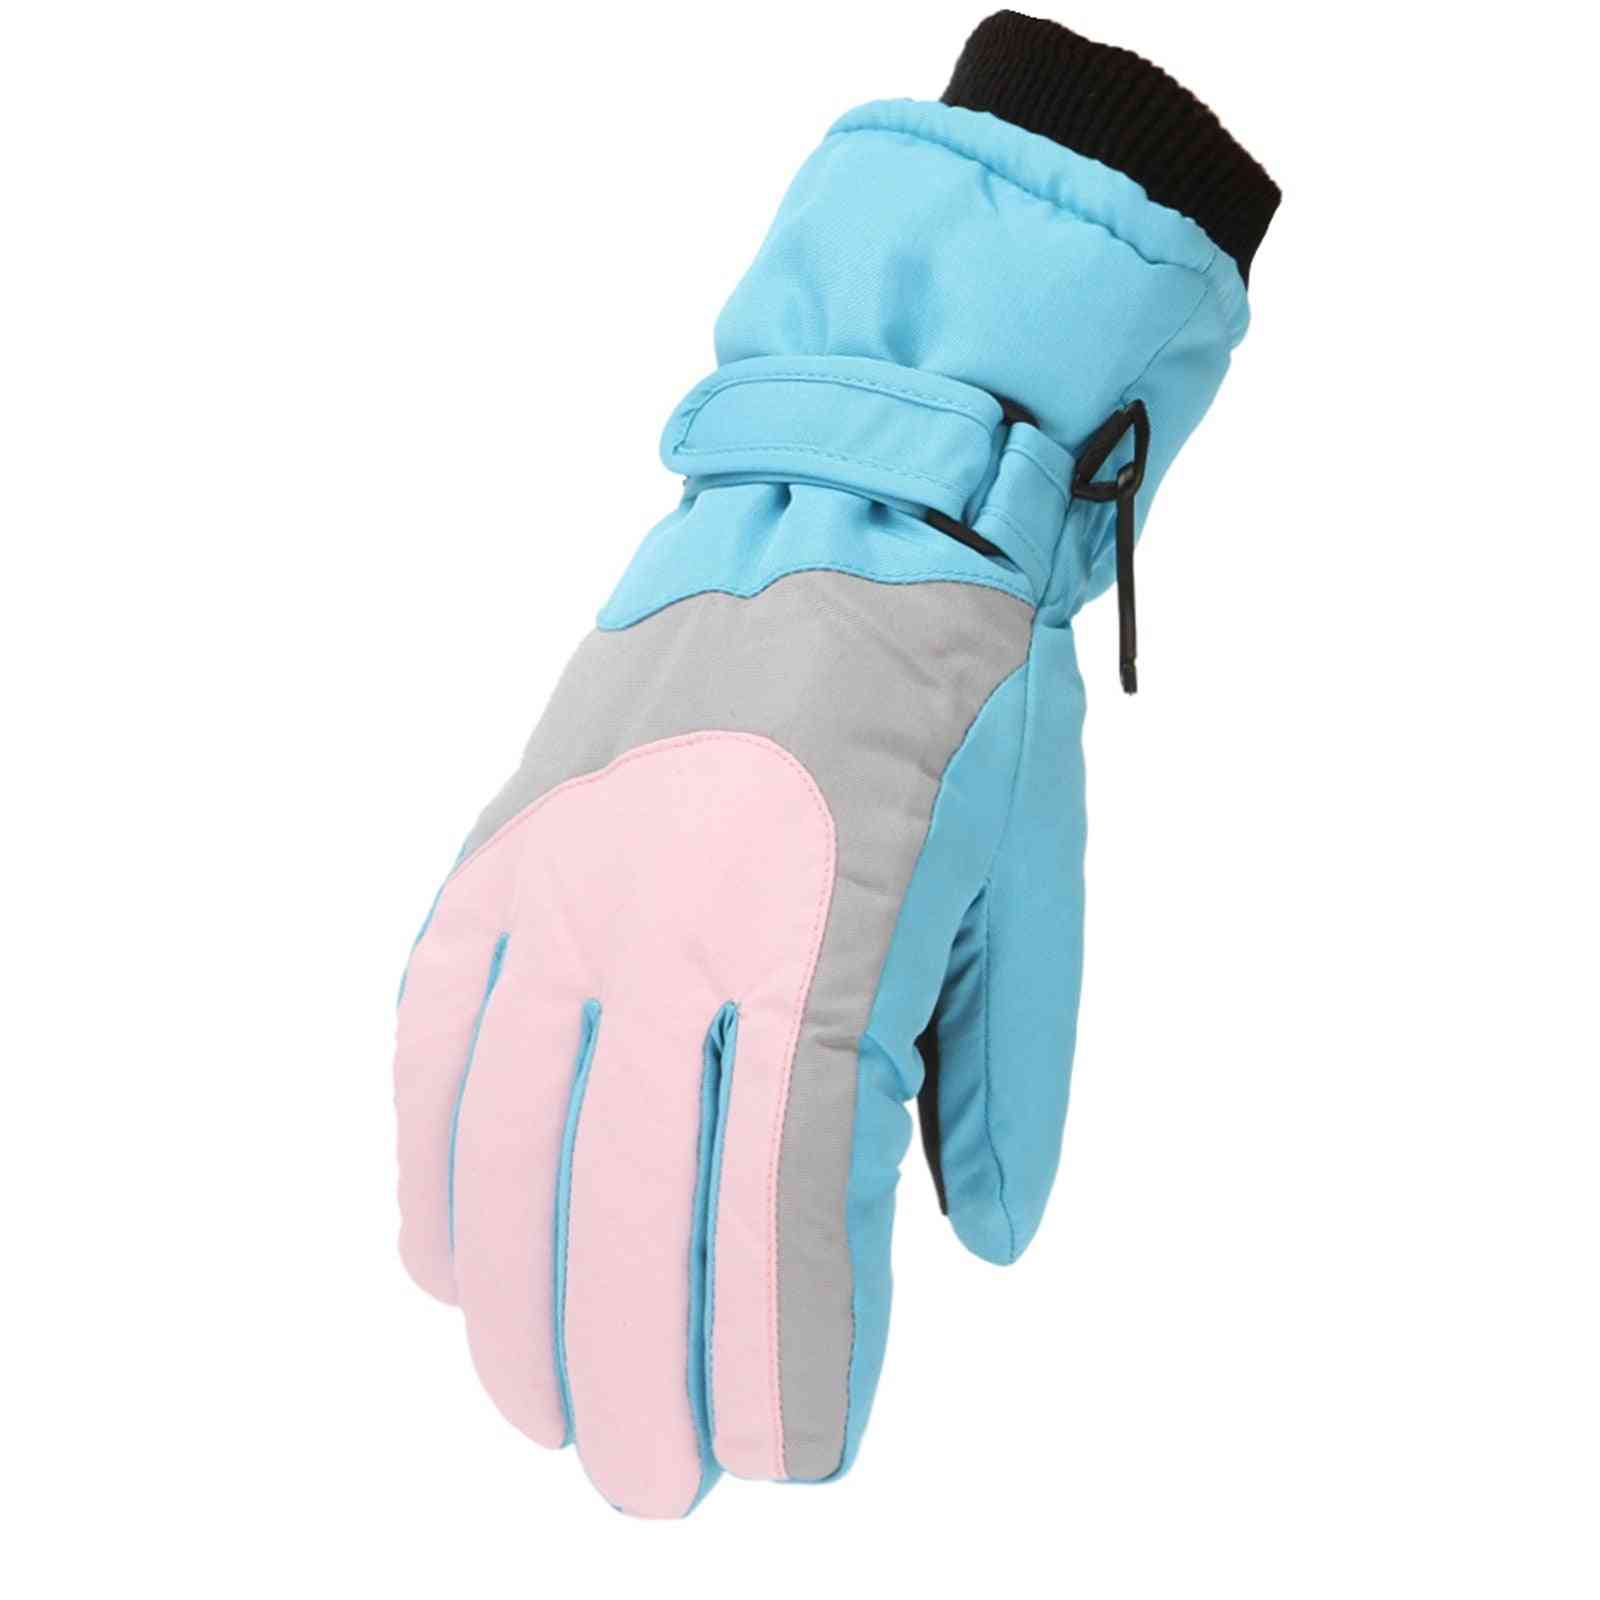 Boys & Windproof Sports Ski Warm Gloves